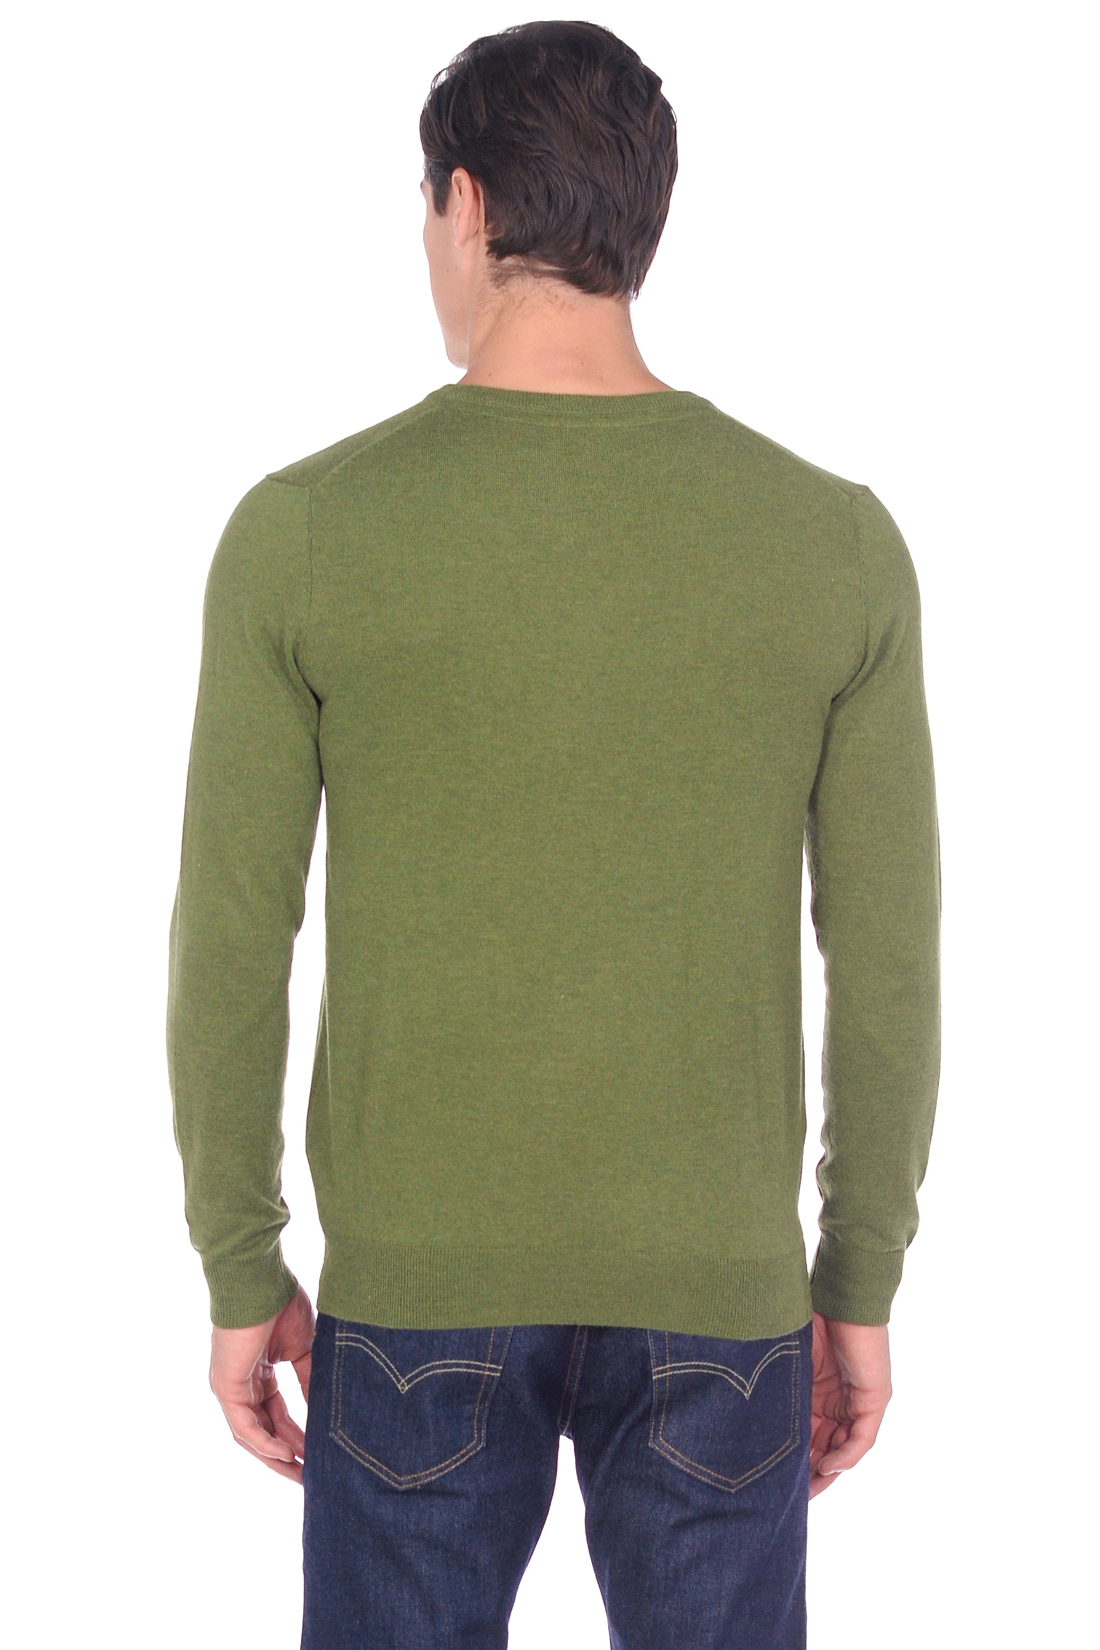 Базовый пуловер с шерстью (арт. baon B639702), размер XXL, цвет vine melange#зеленый Базовый пуловер с шерстью (арт. baon B639702) - фото 2